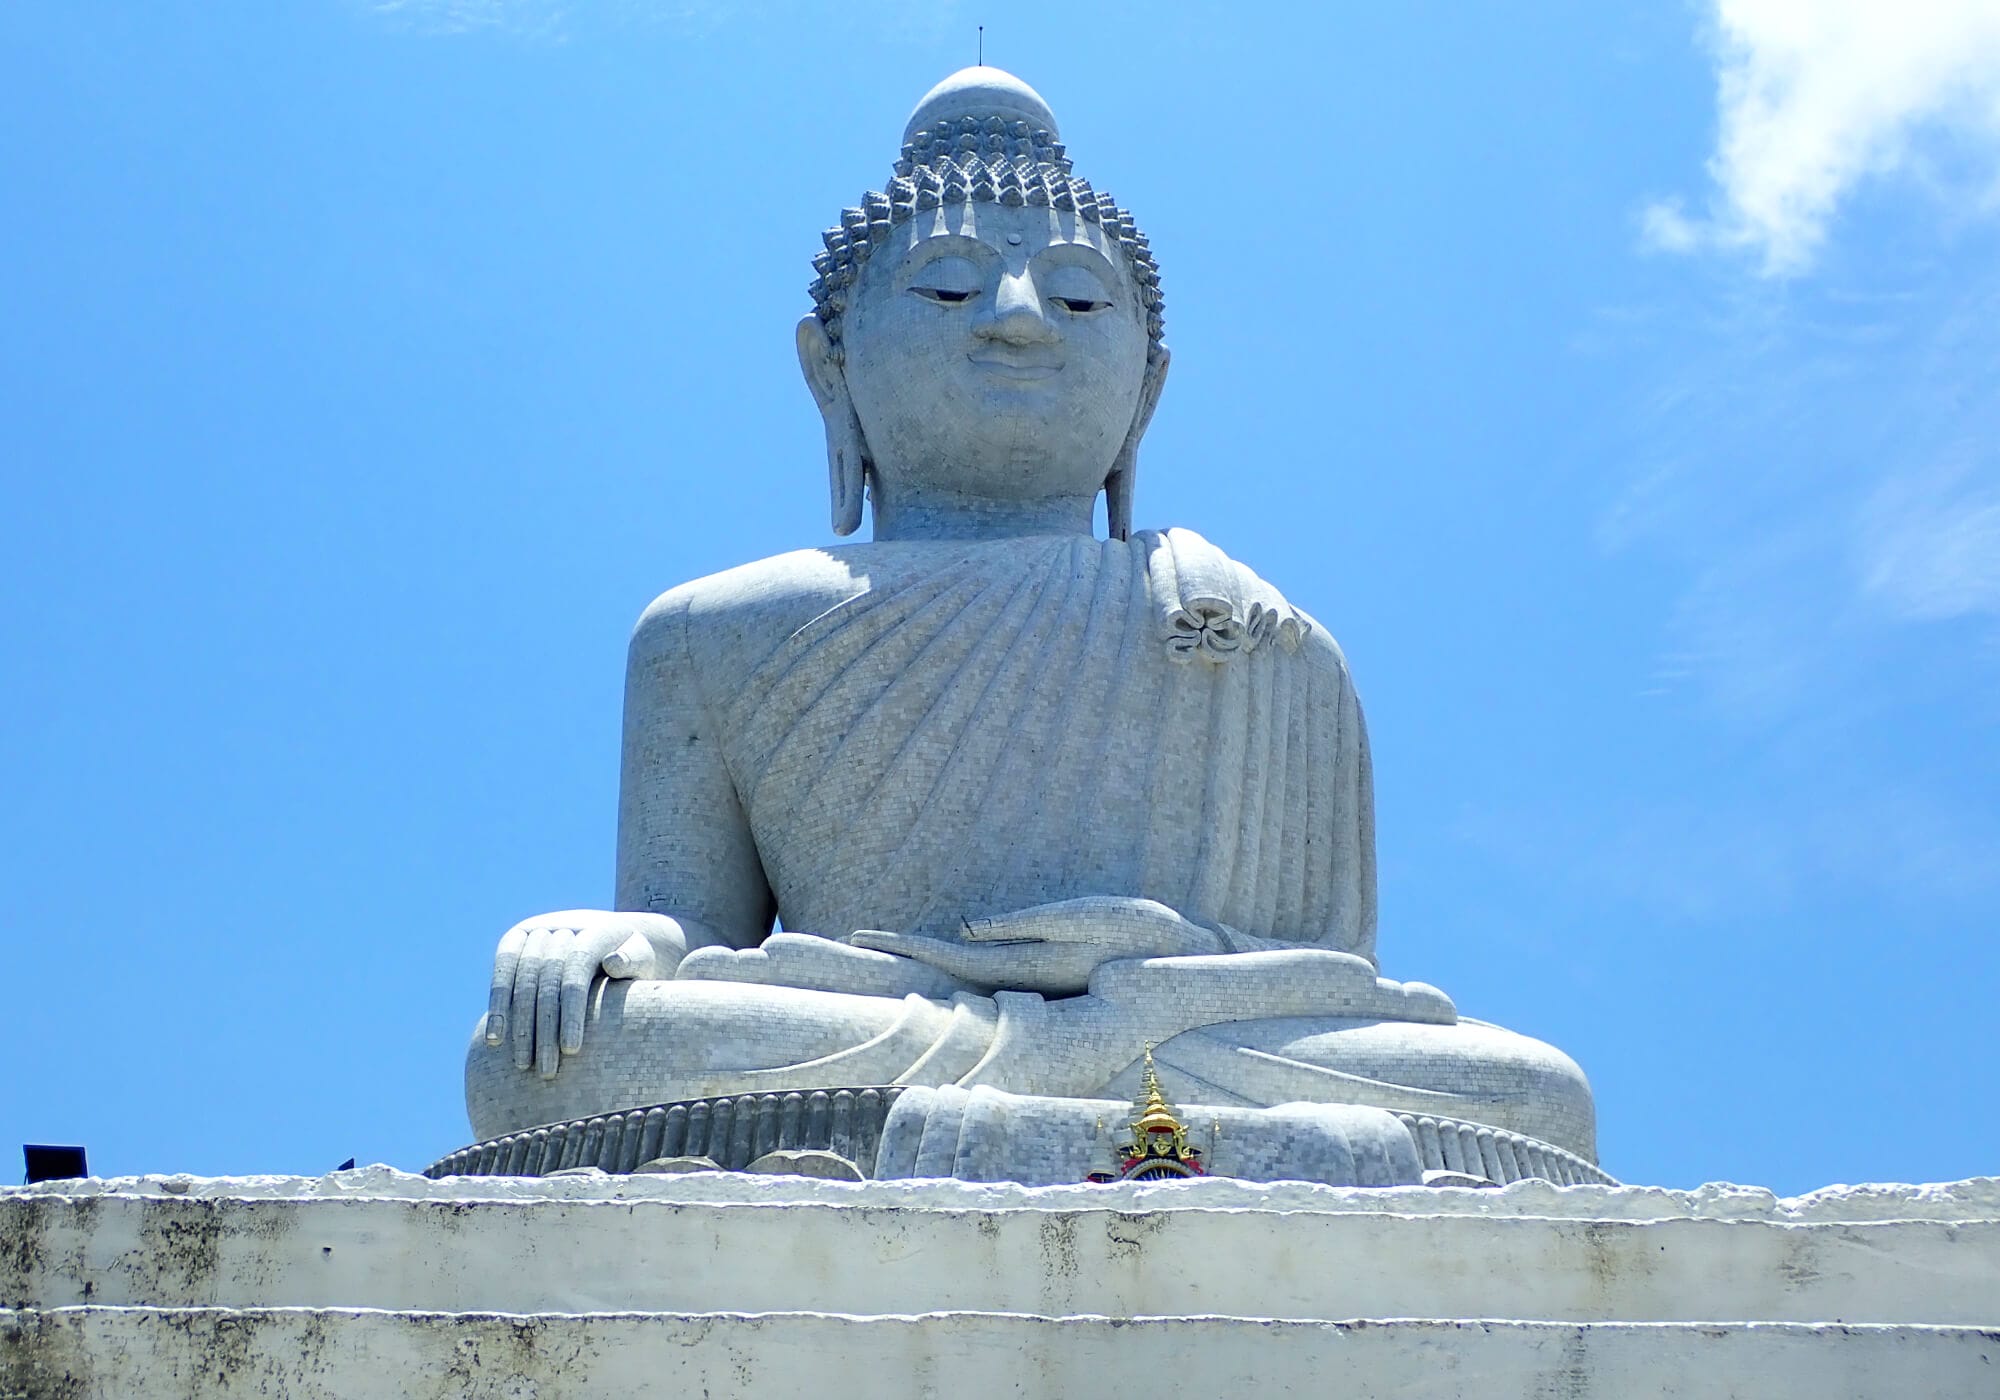 Big Buddah Statue, Phuket, Thailand